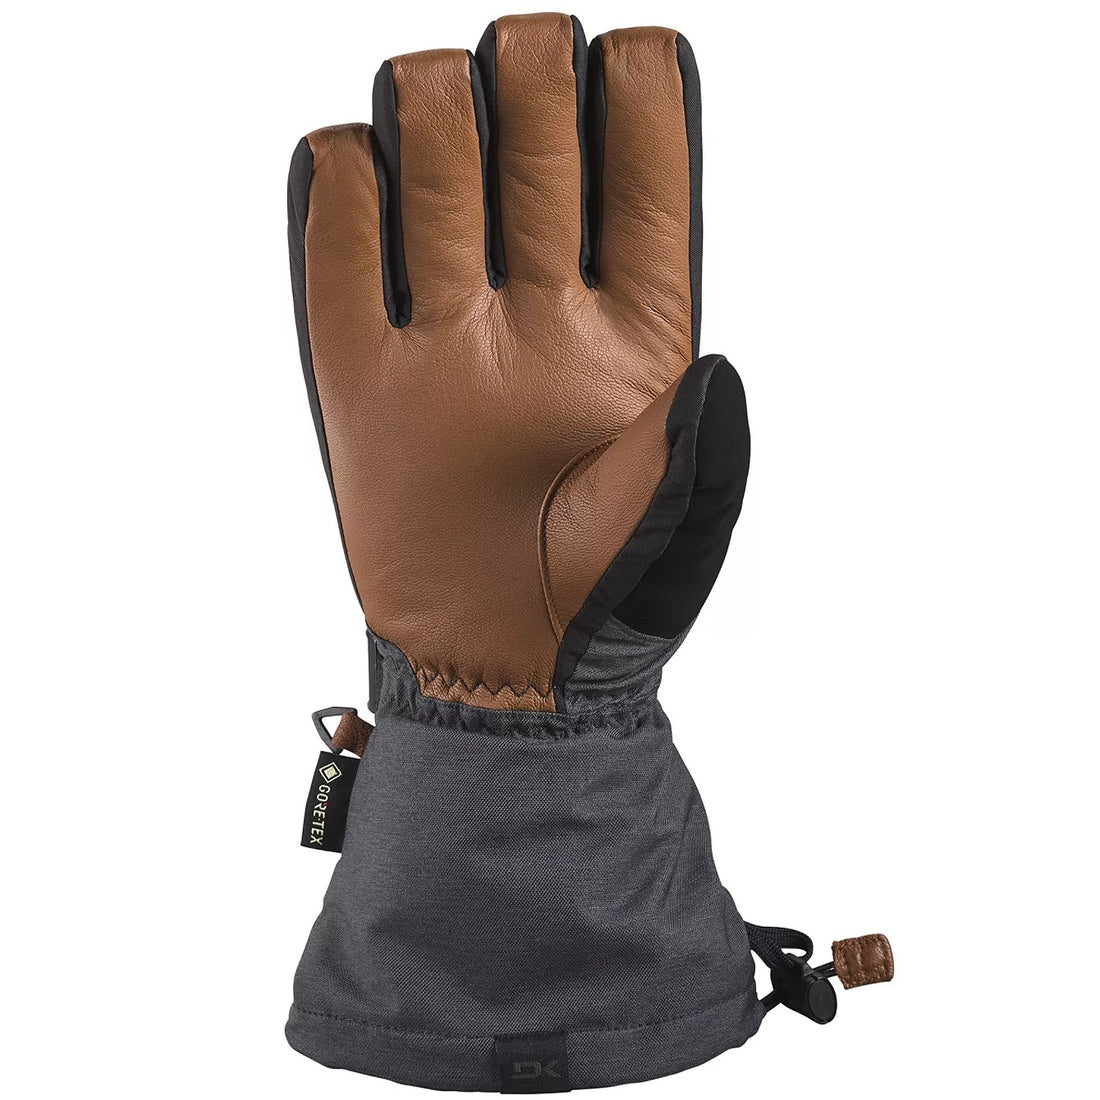 Dakine Leather Gore Tex Titan Glove